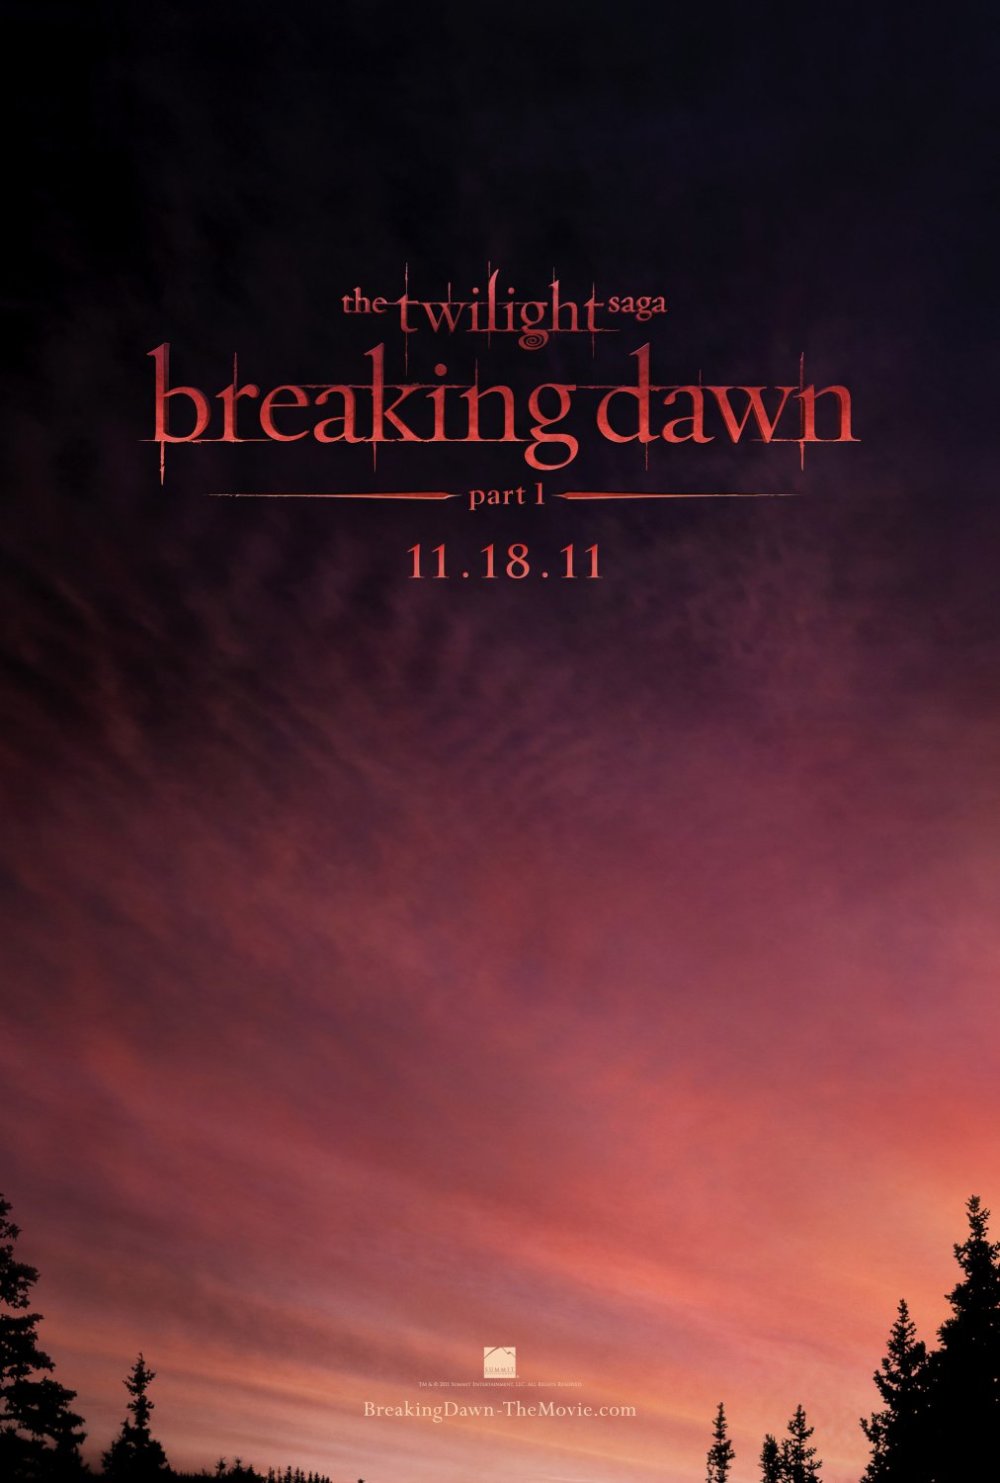 The Twilight Saga: Breaking Dawn teaserposter